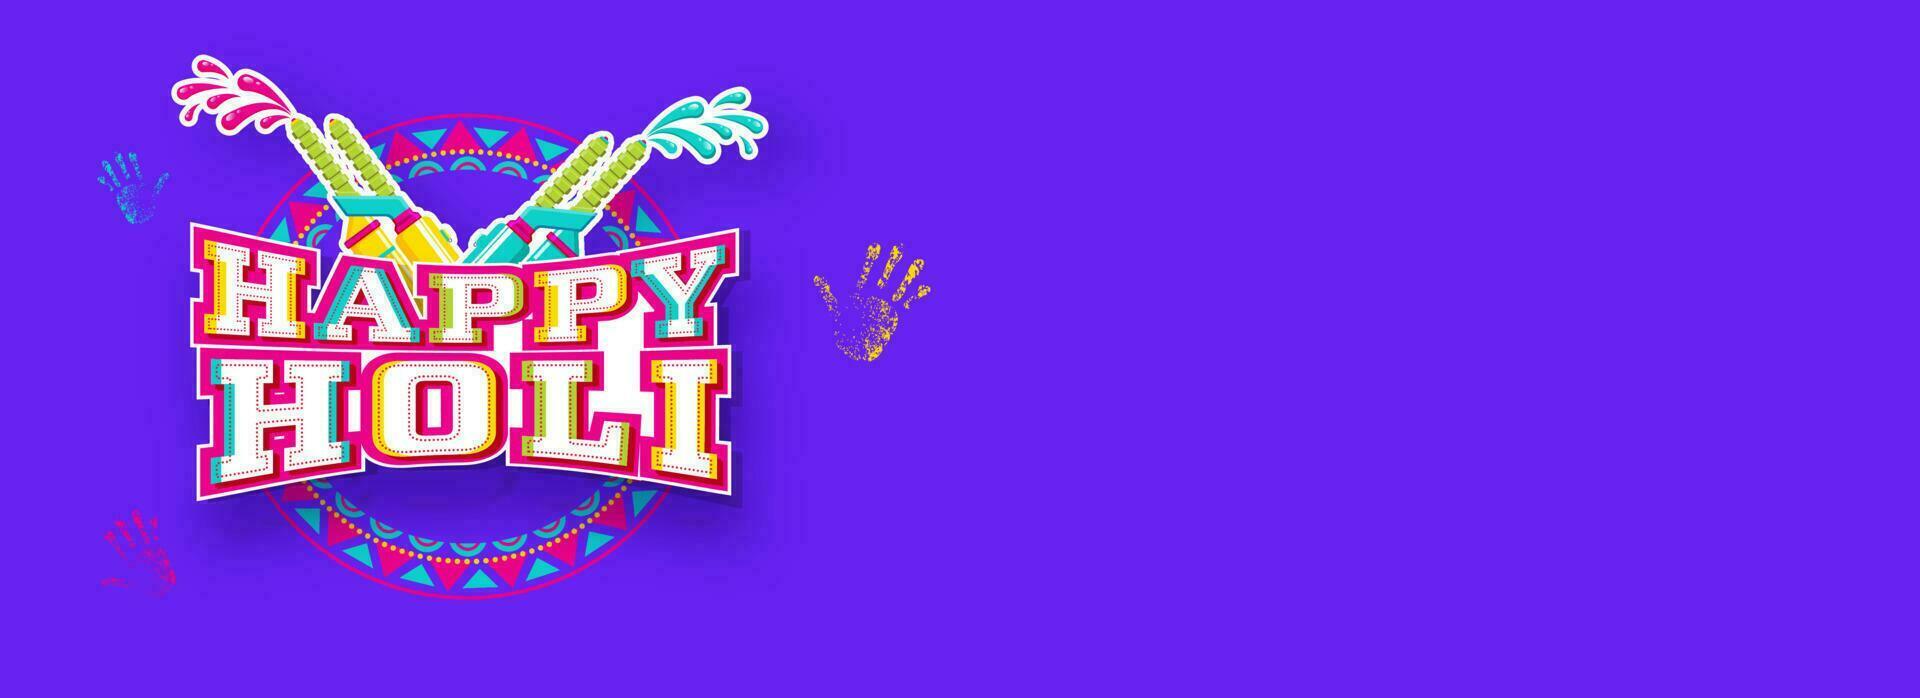 Sticker Style Happy Holi Font With Splashing Color Guns  And Handprints On Violet Background. Banner Or Header Design. vector